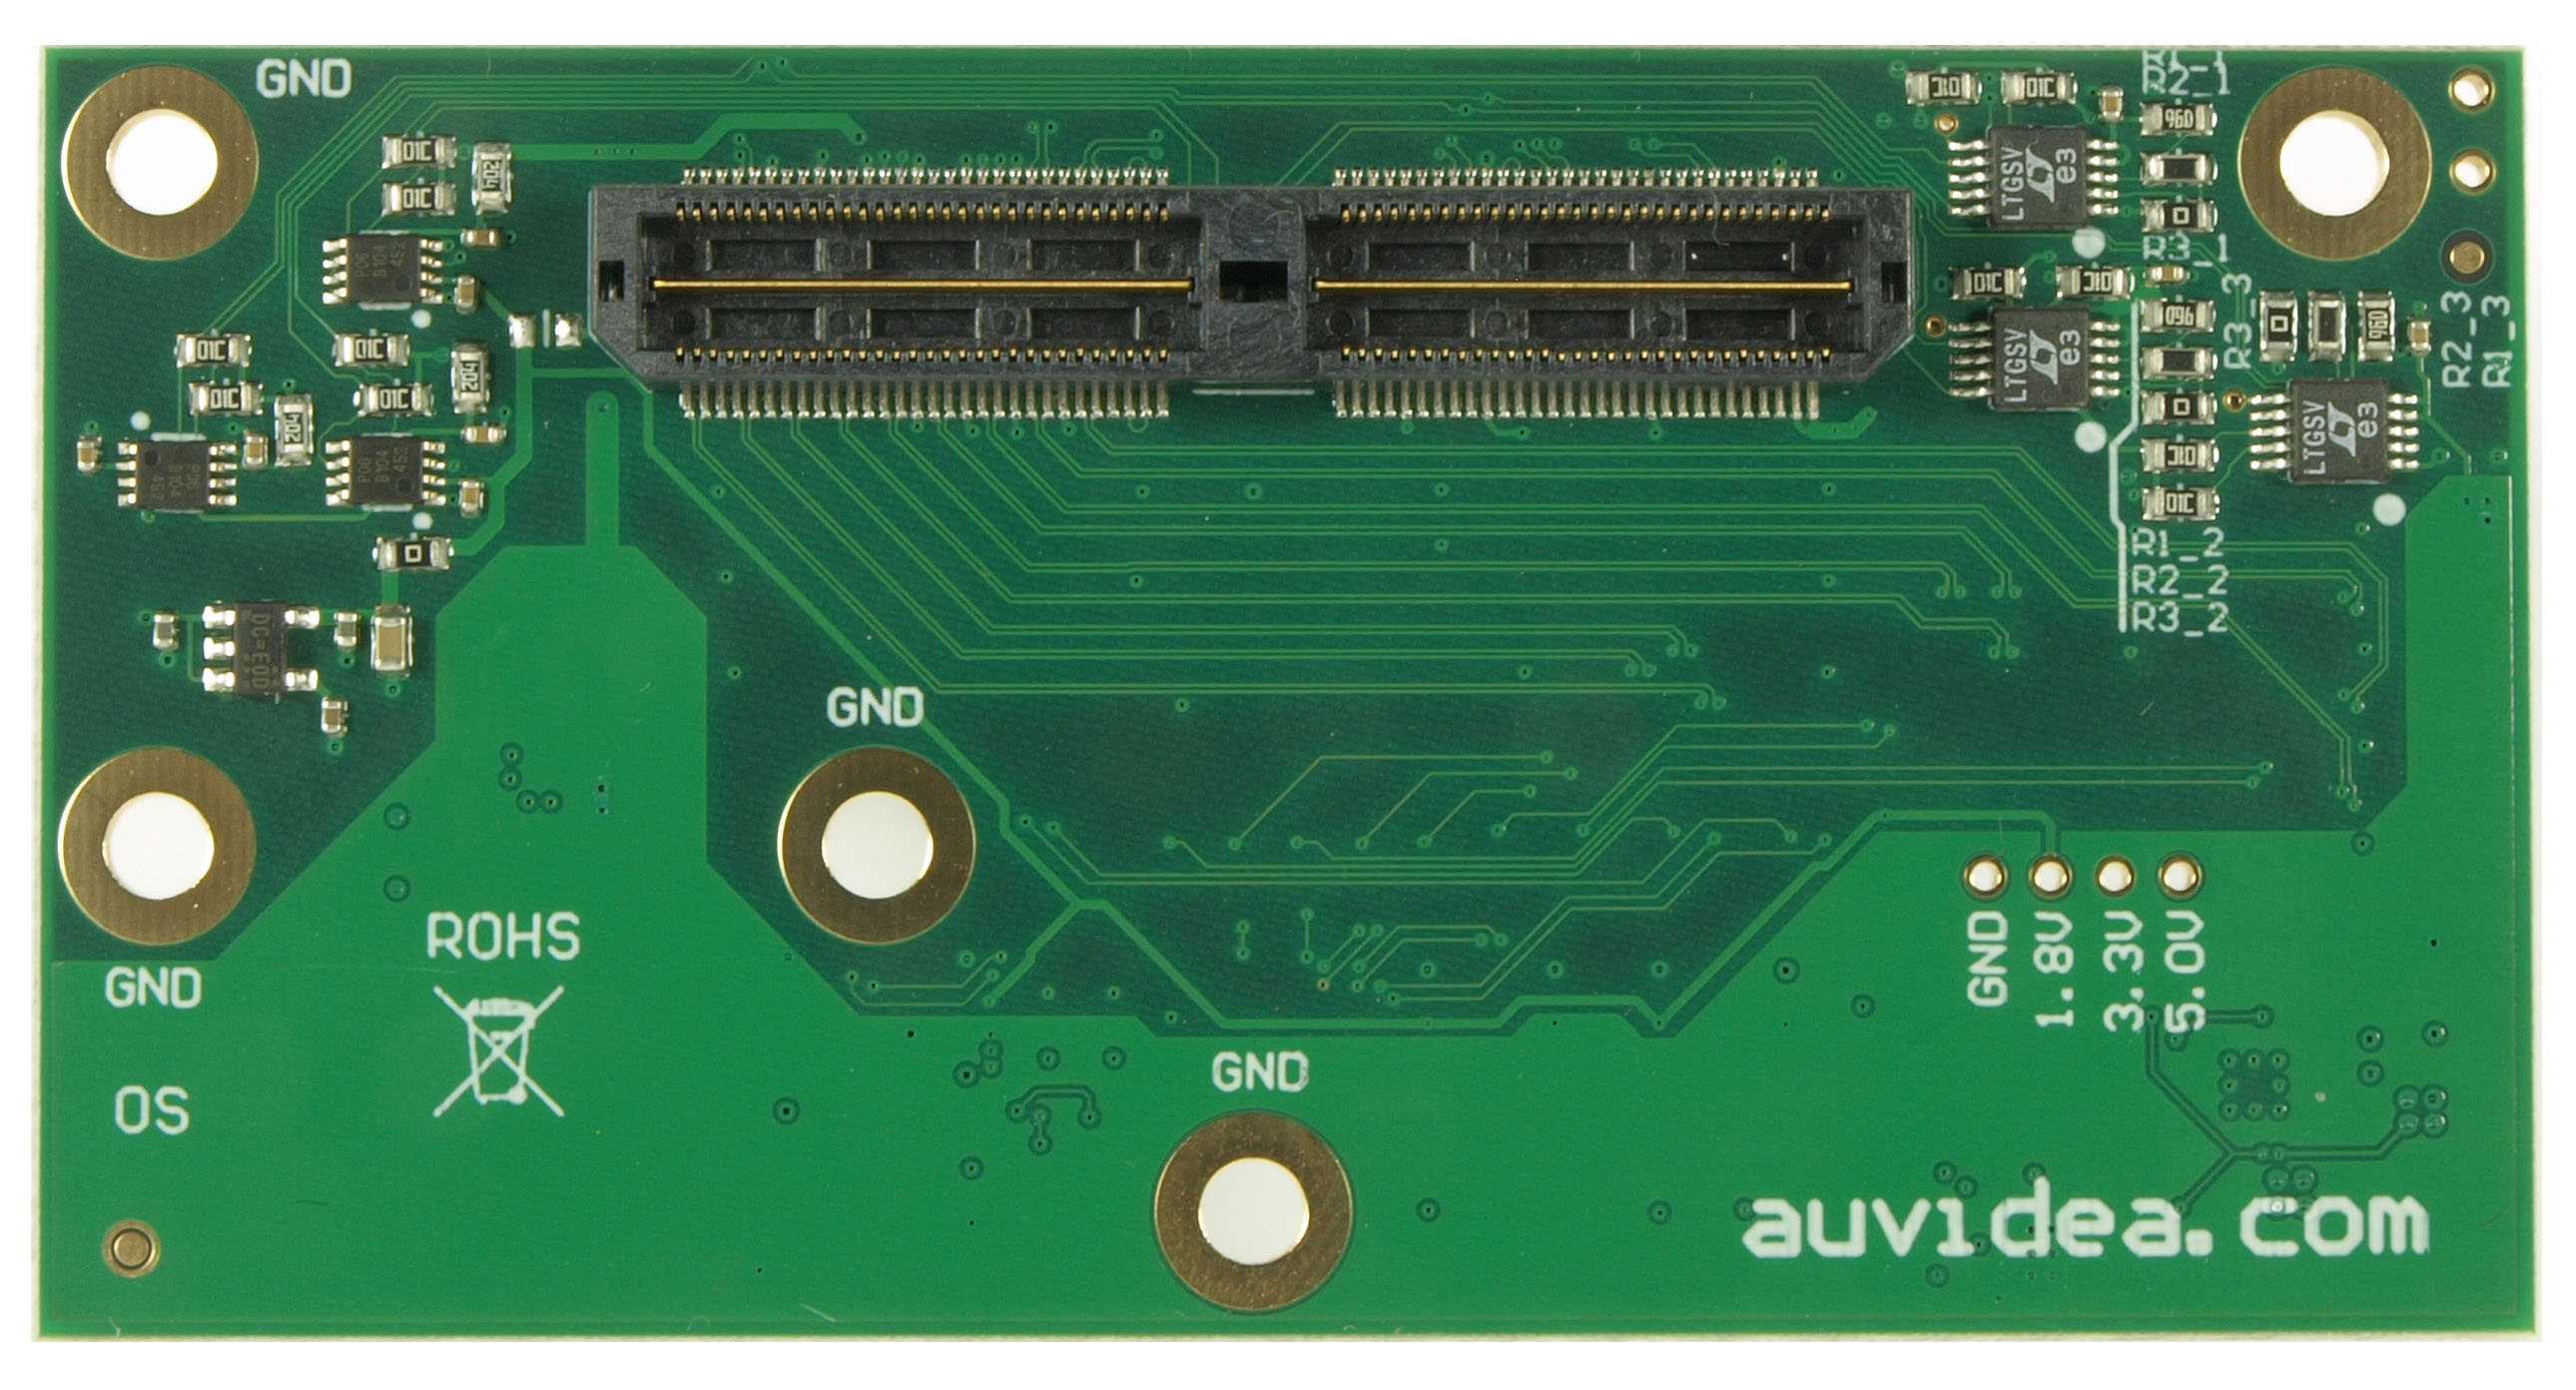 J20 add-on module for the Jetson TX1 development kit